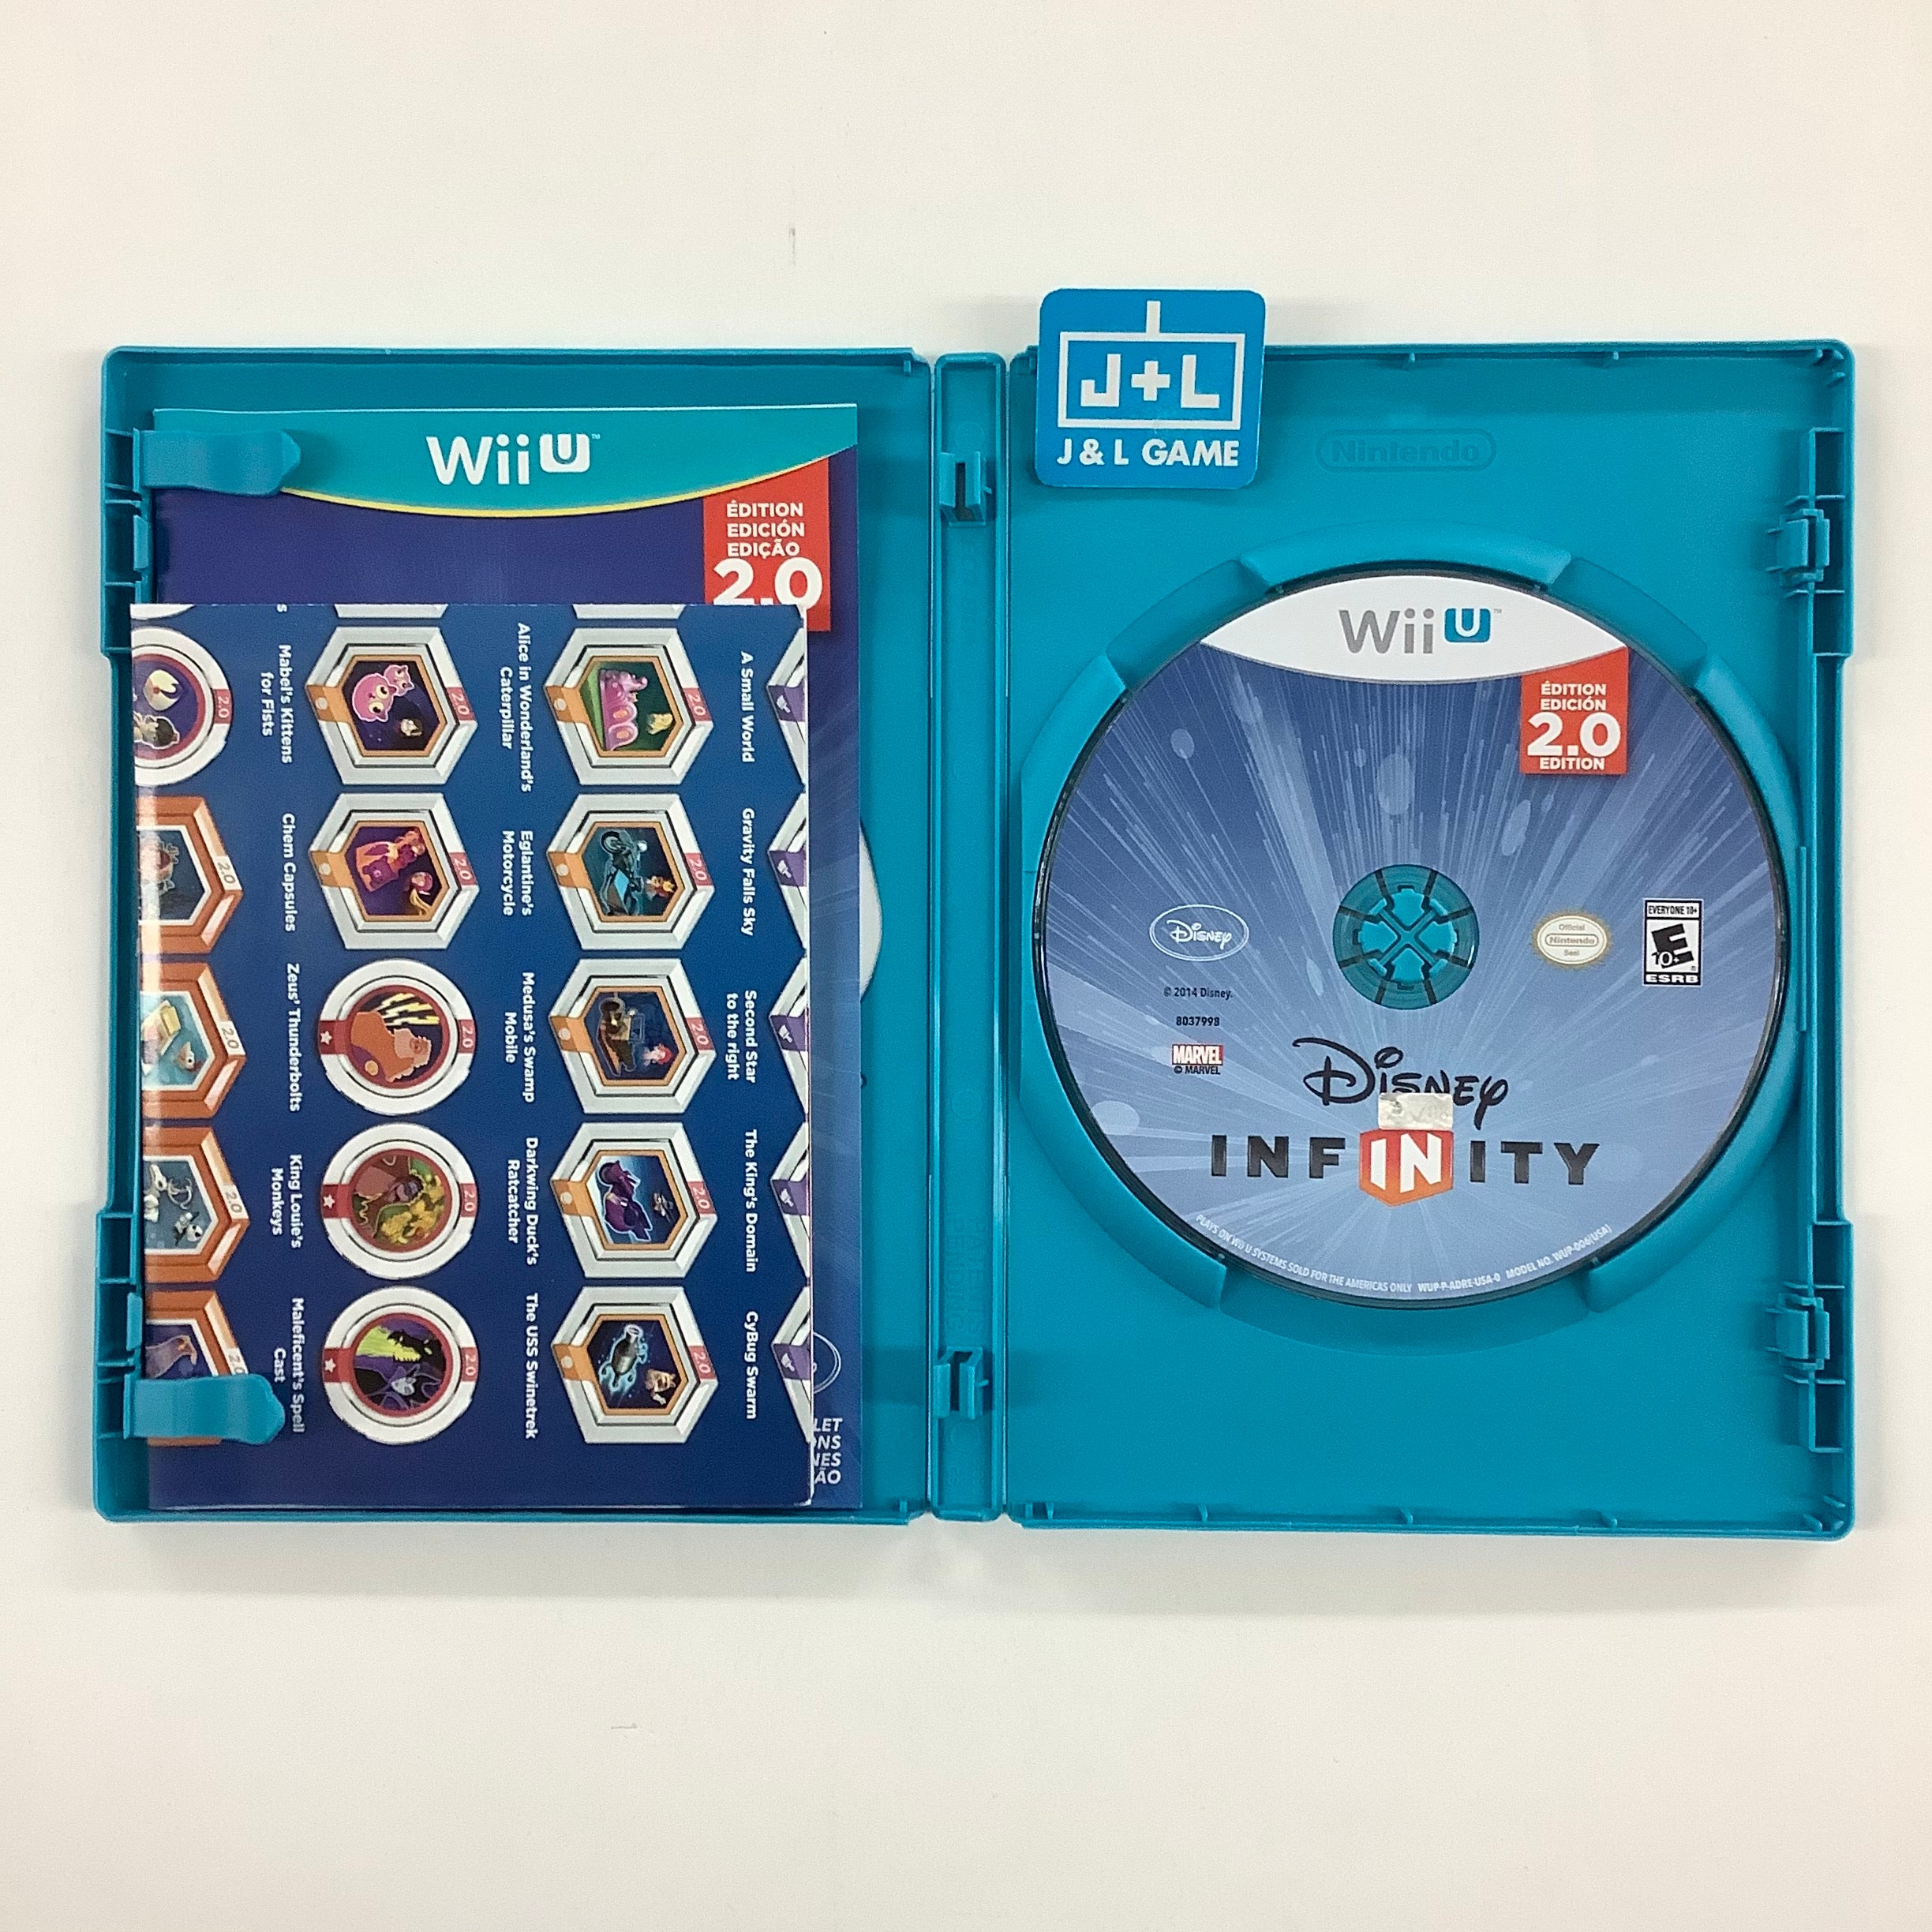 Disney Infinity 2.0 ( Game Only )  - Nintendo Wii U Video Games Disney Interactive Studios   